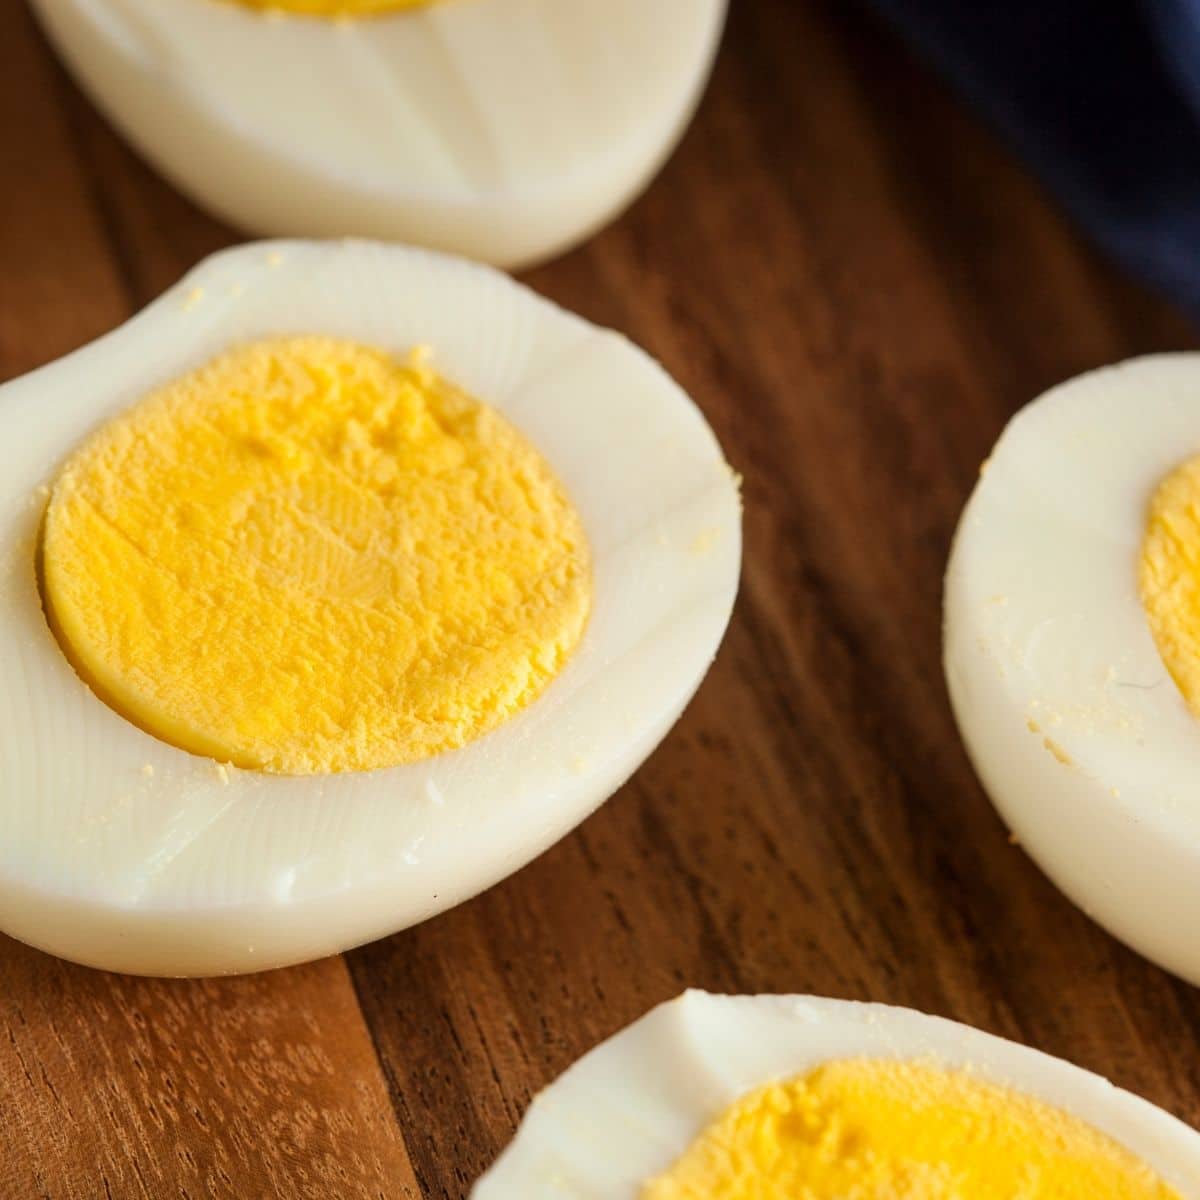 https://kaseytrenum.com/wp-content/uploads/2021/09/how-to-boil-perfect-hard-boiled-eggs.jpg